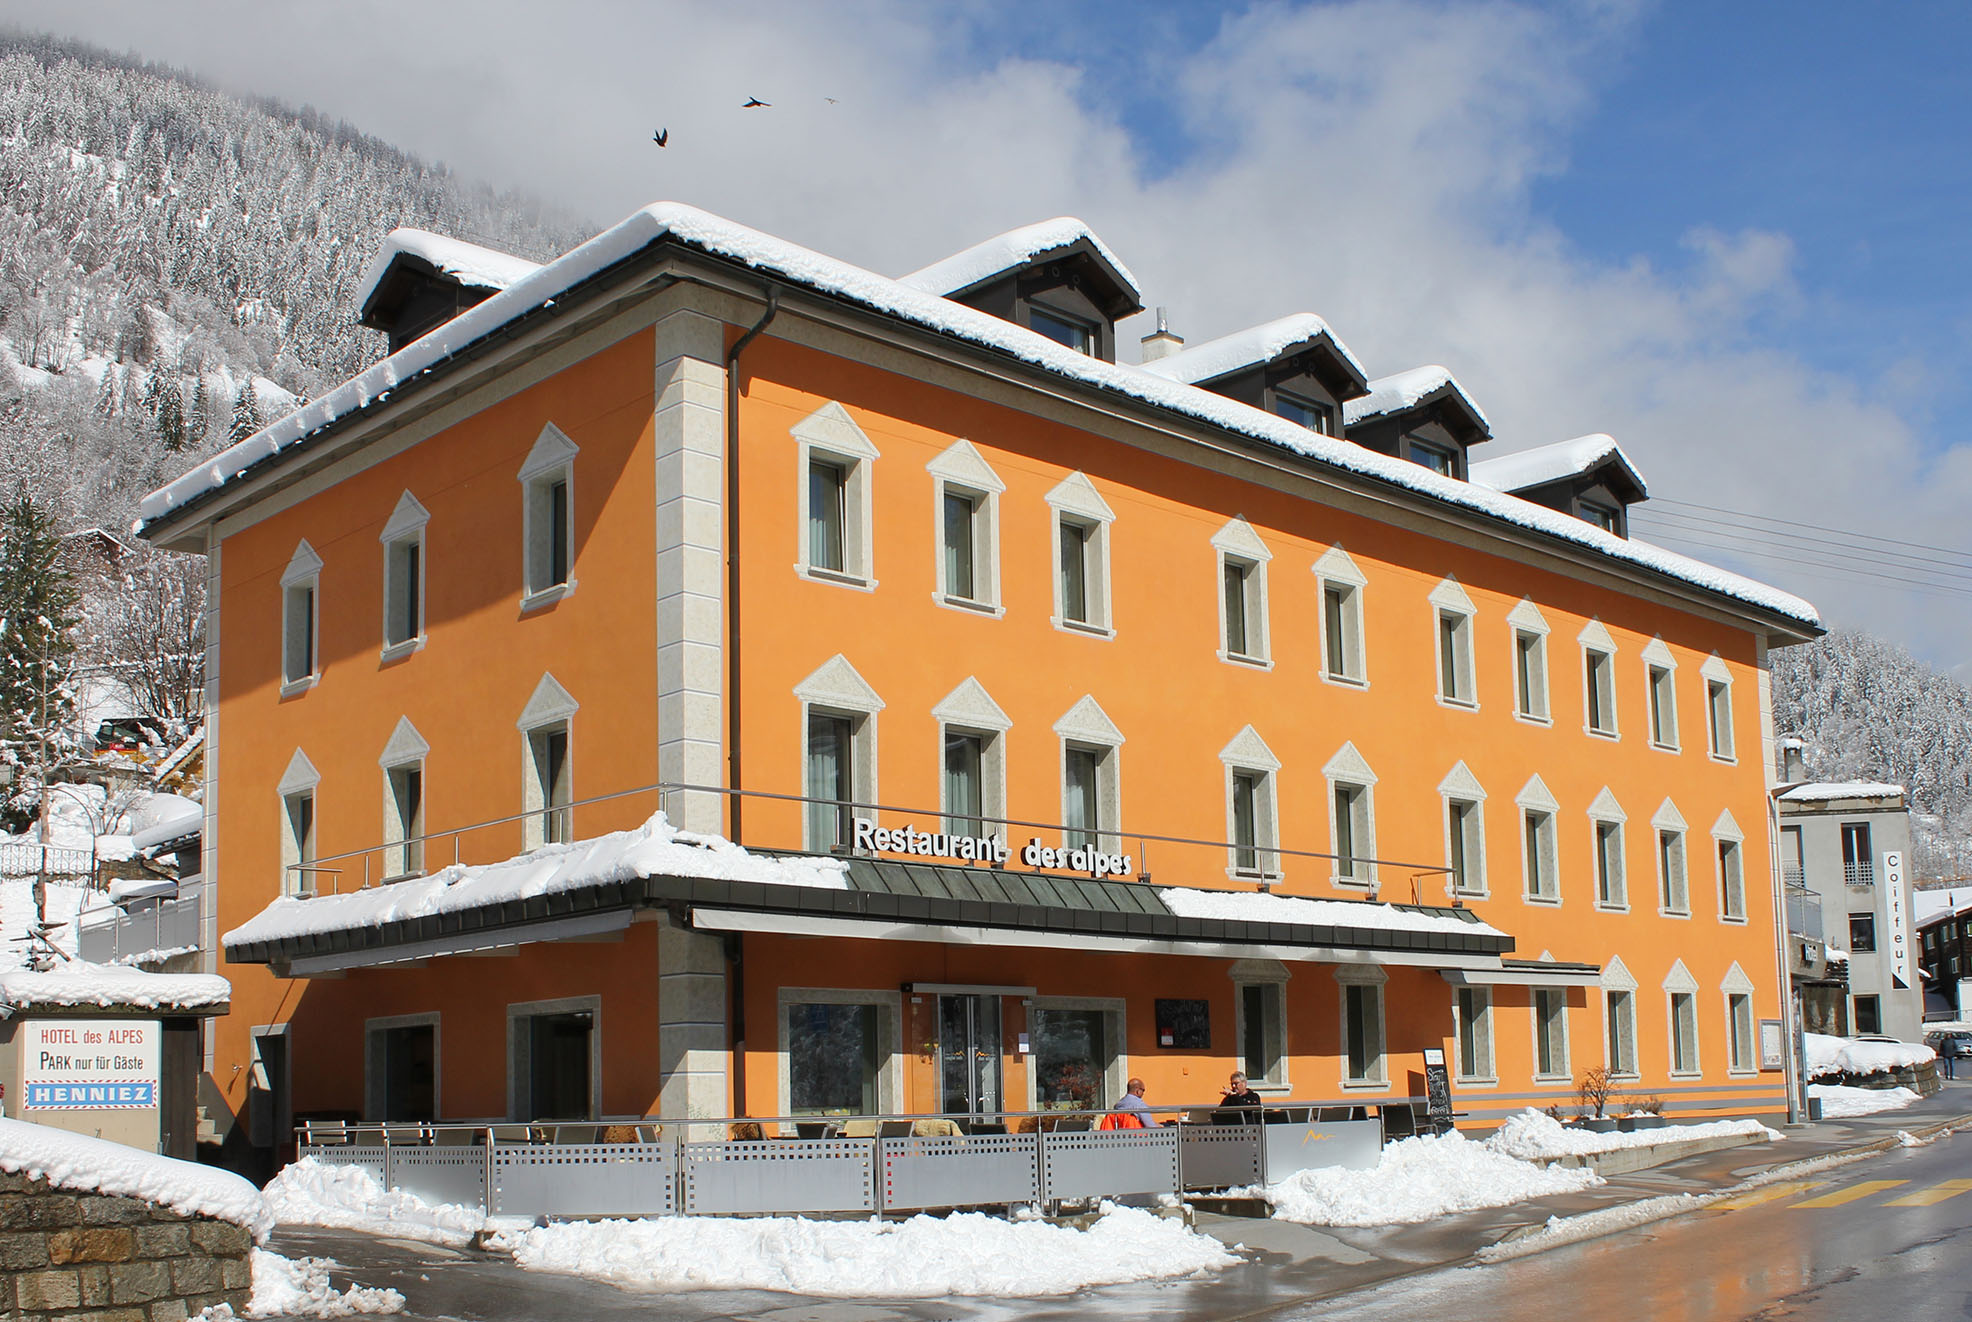 Hotel des alpes Winter 19jpg